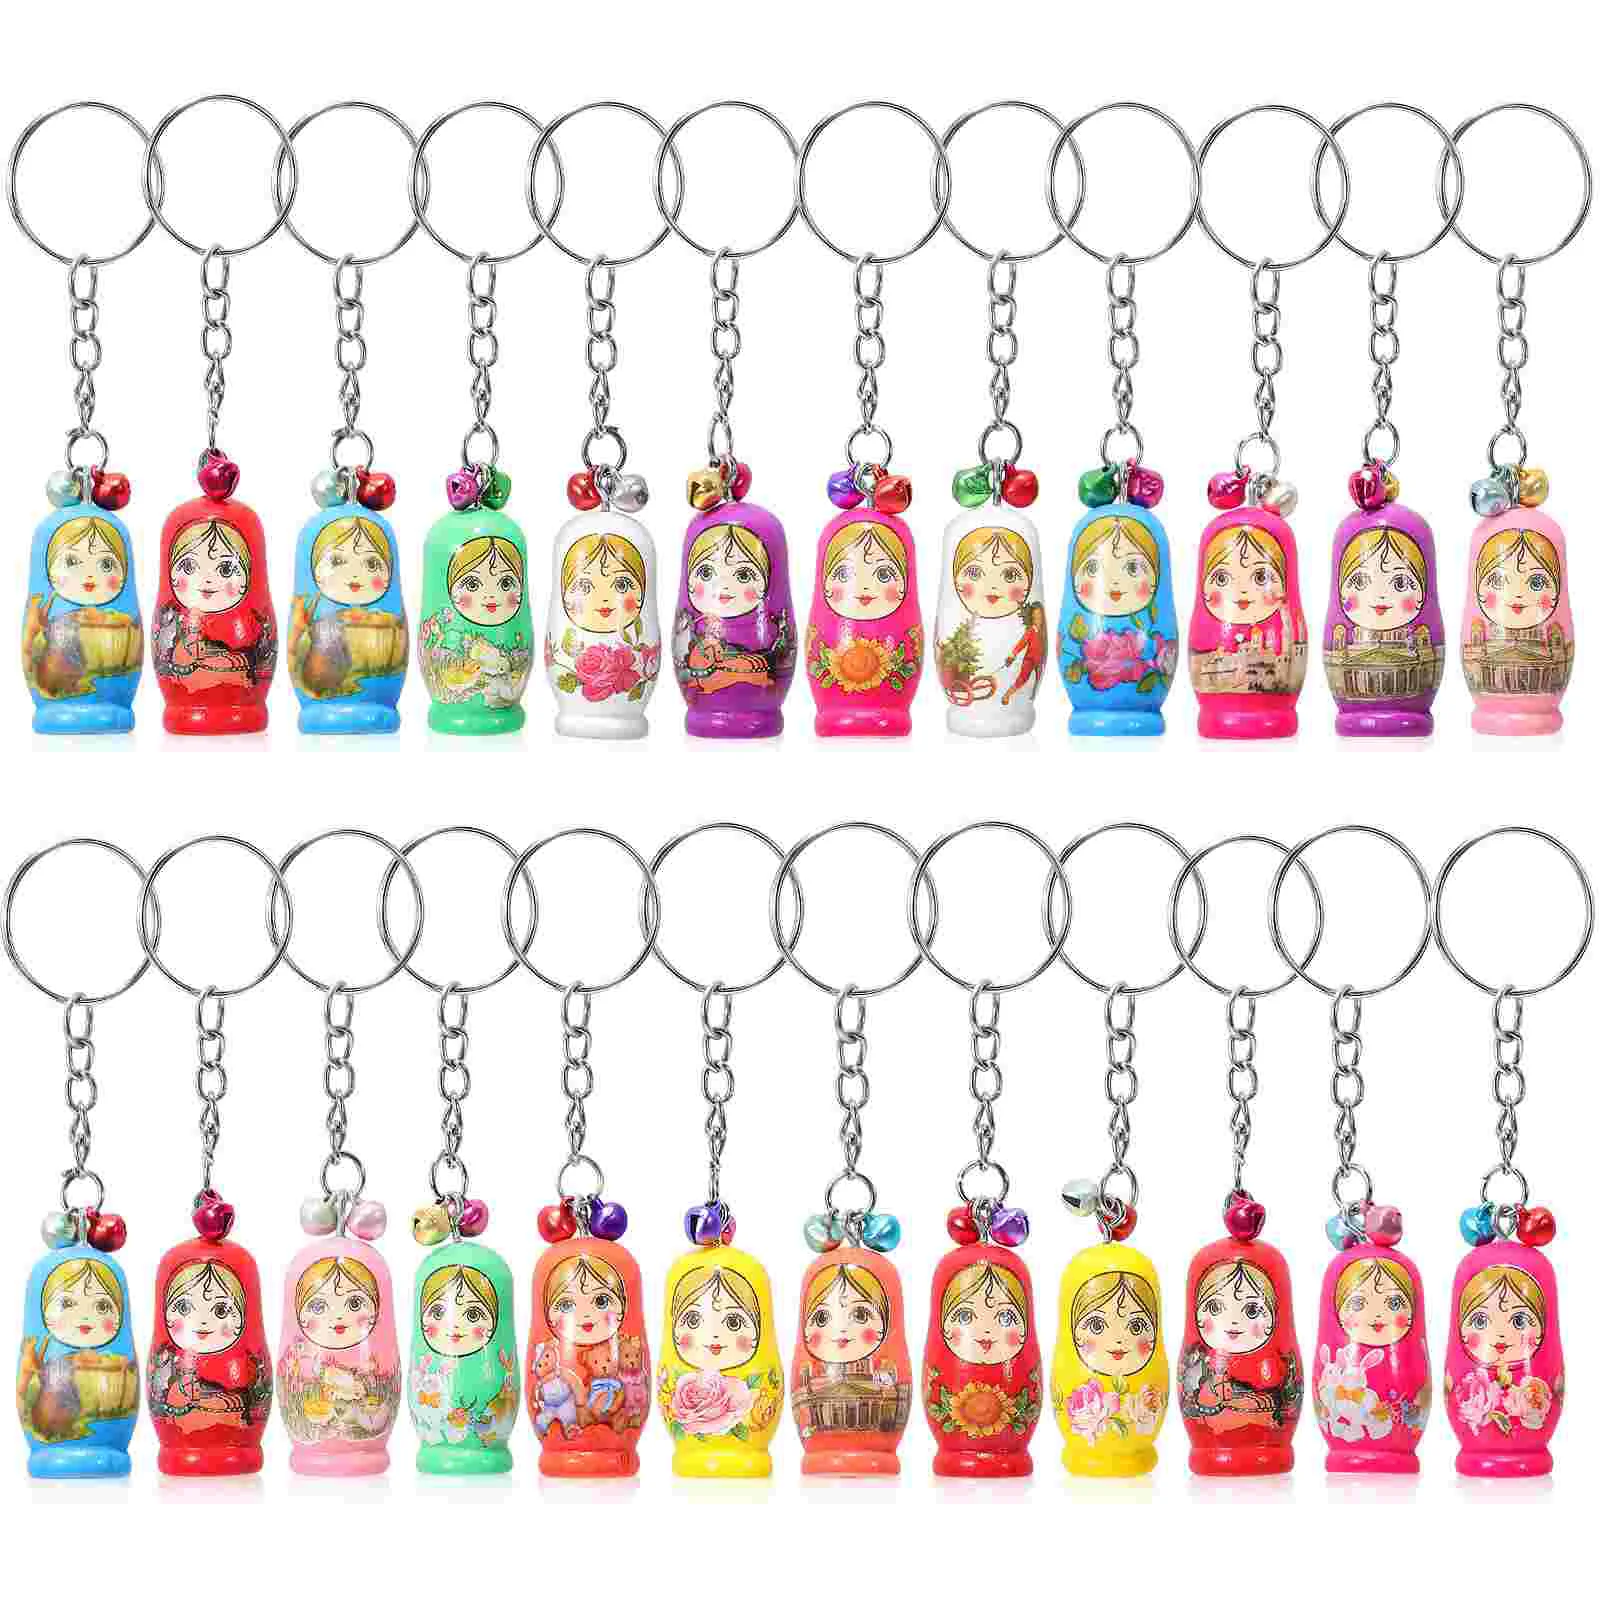 

24 Pcs Matryoshka Keychain Car Fob Russian Nesting Dolls Pendant Keychains Holders Keys Wooden Rings